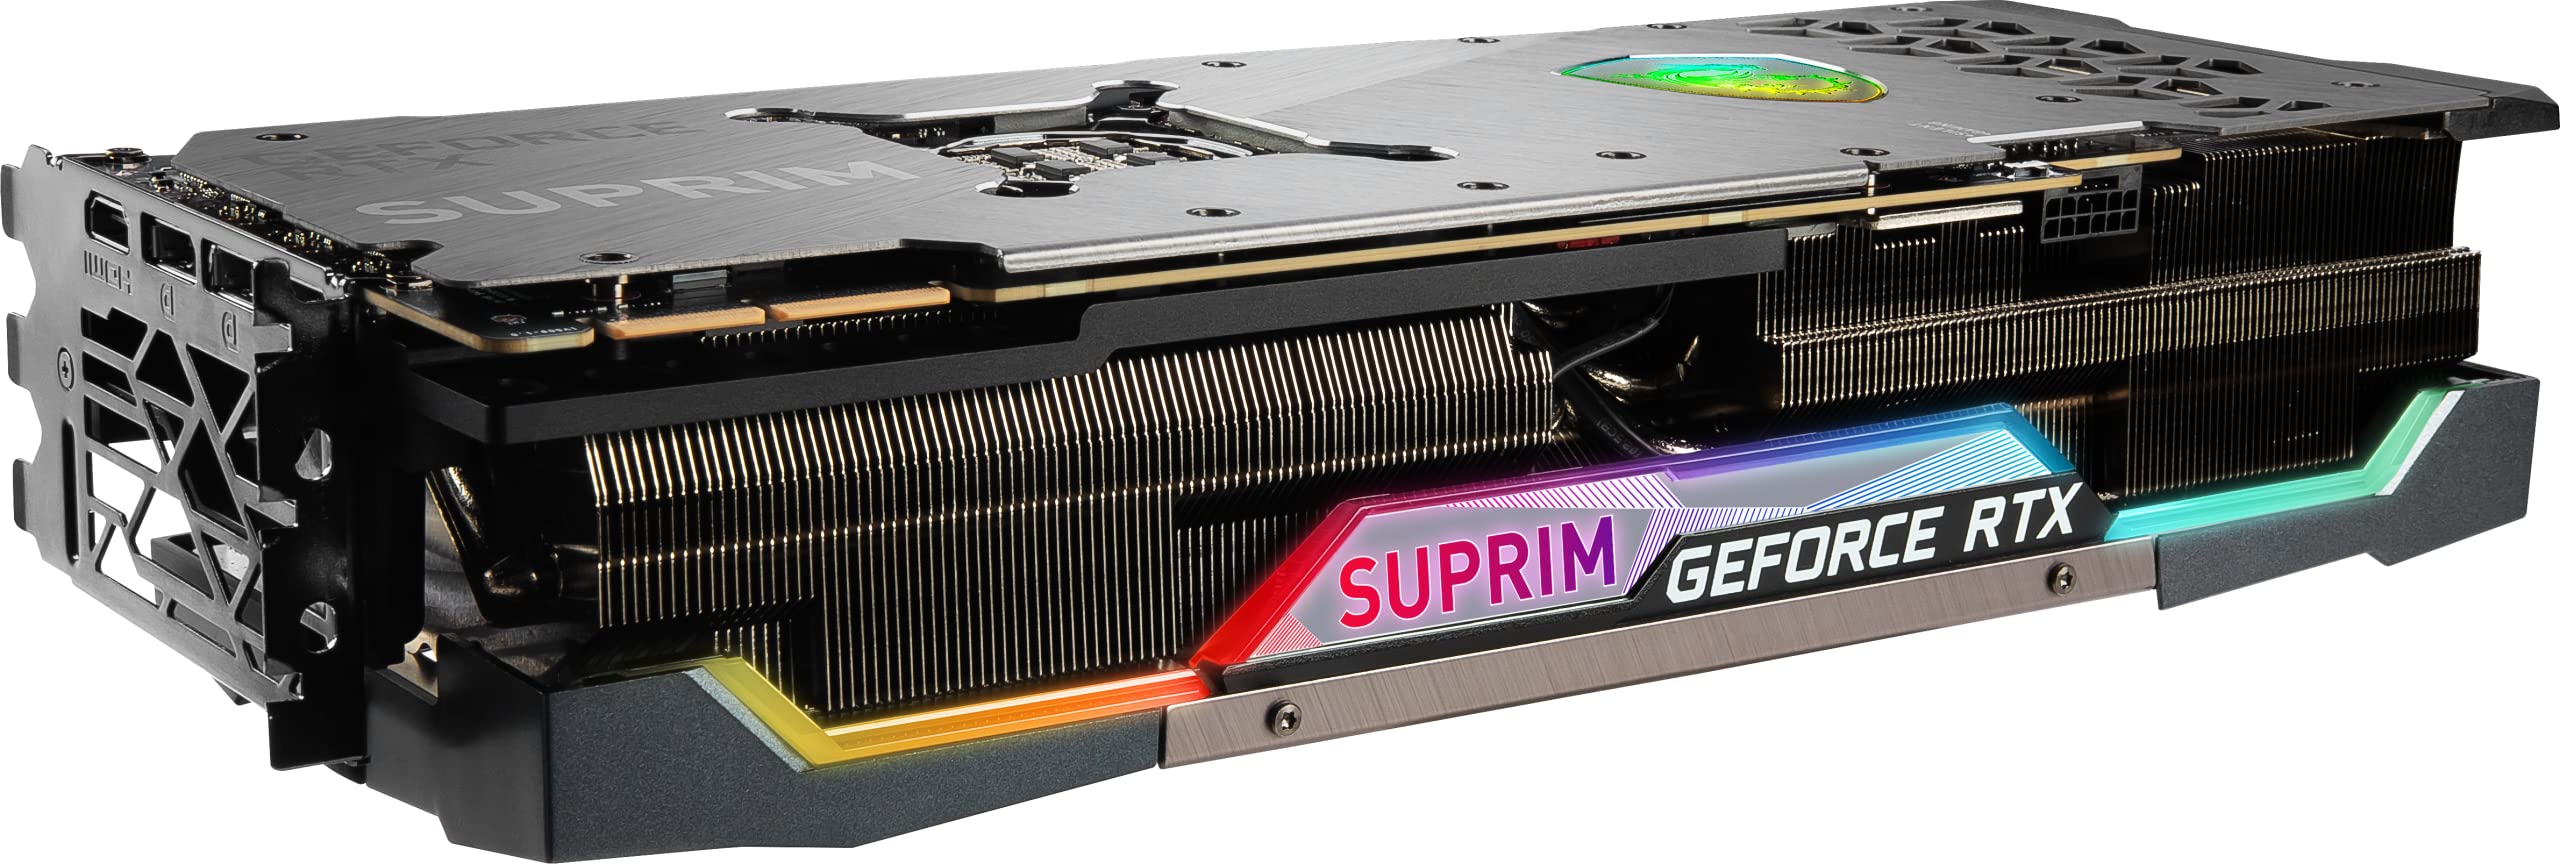 MSI GeForce RTX 3090 Ti SUPRIM X 24G Gaming Graphics Card - 24GB GDDR6X, 1950 MHz, PCI Express Gen 4, 384-bit, 3x DP v 1.4a, HDMI 2.1 (Supports 4K & 8K HDR)